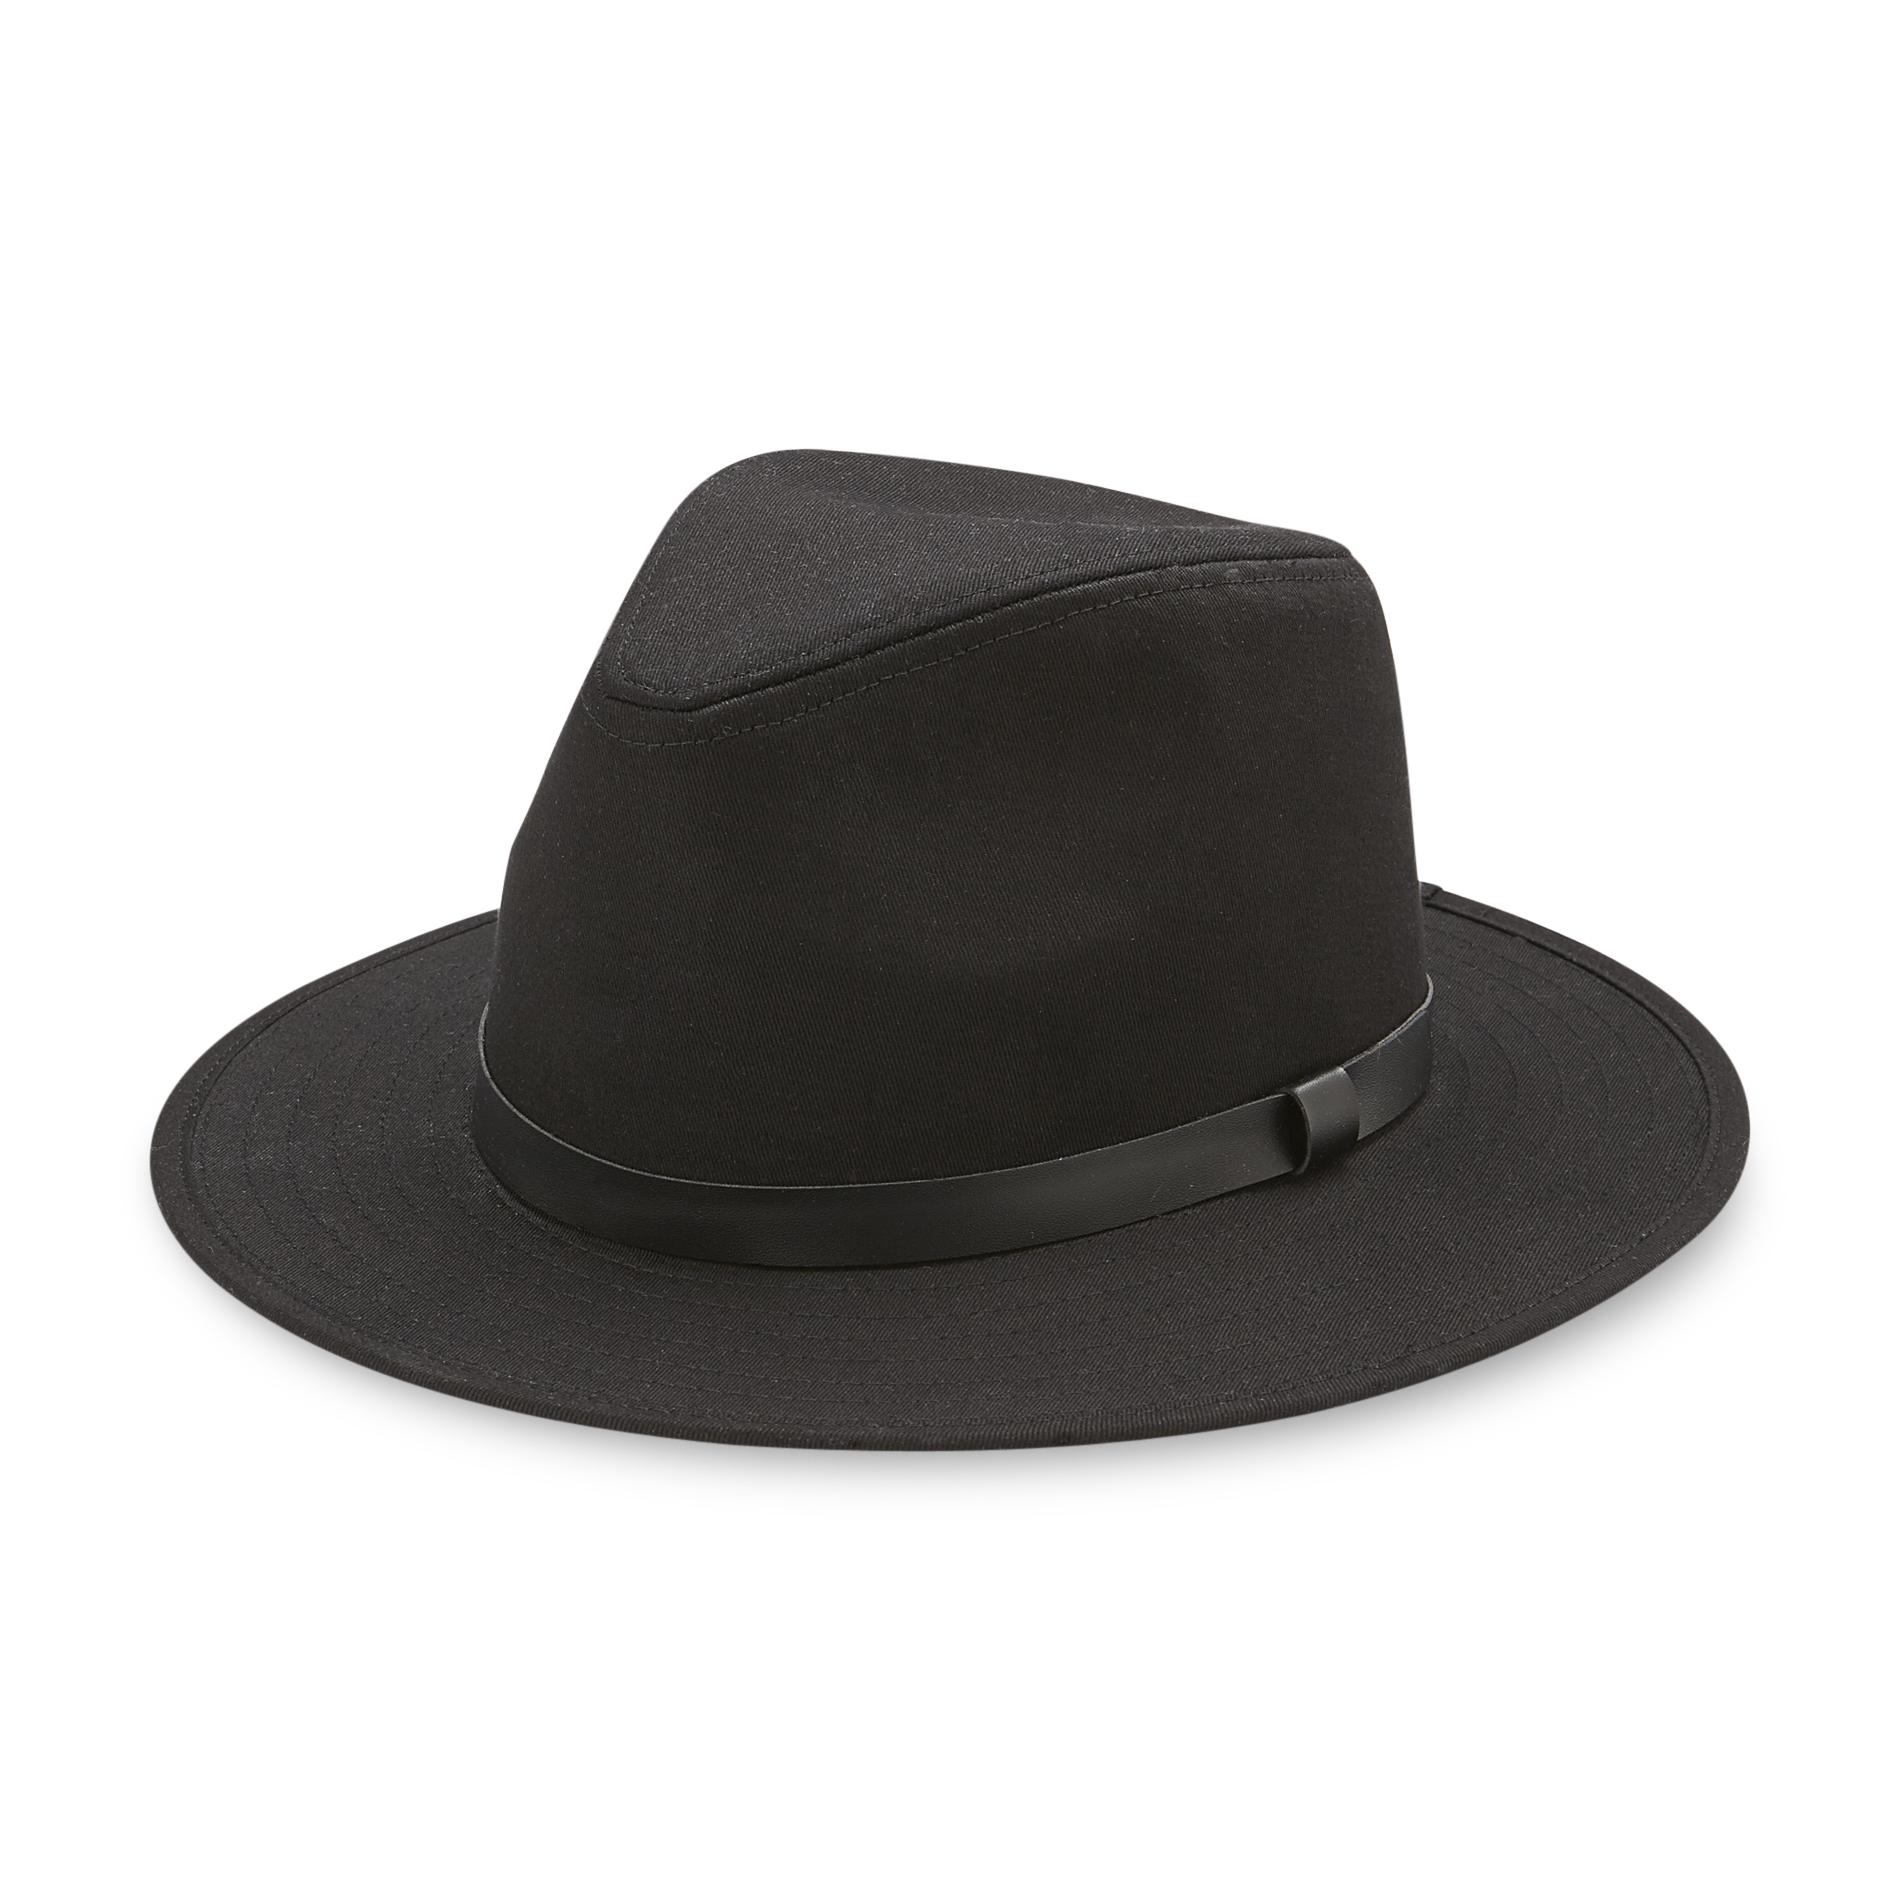 Attention Men's Panama Hat